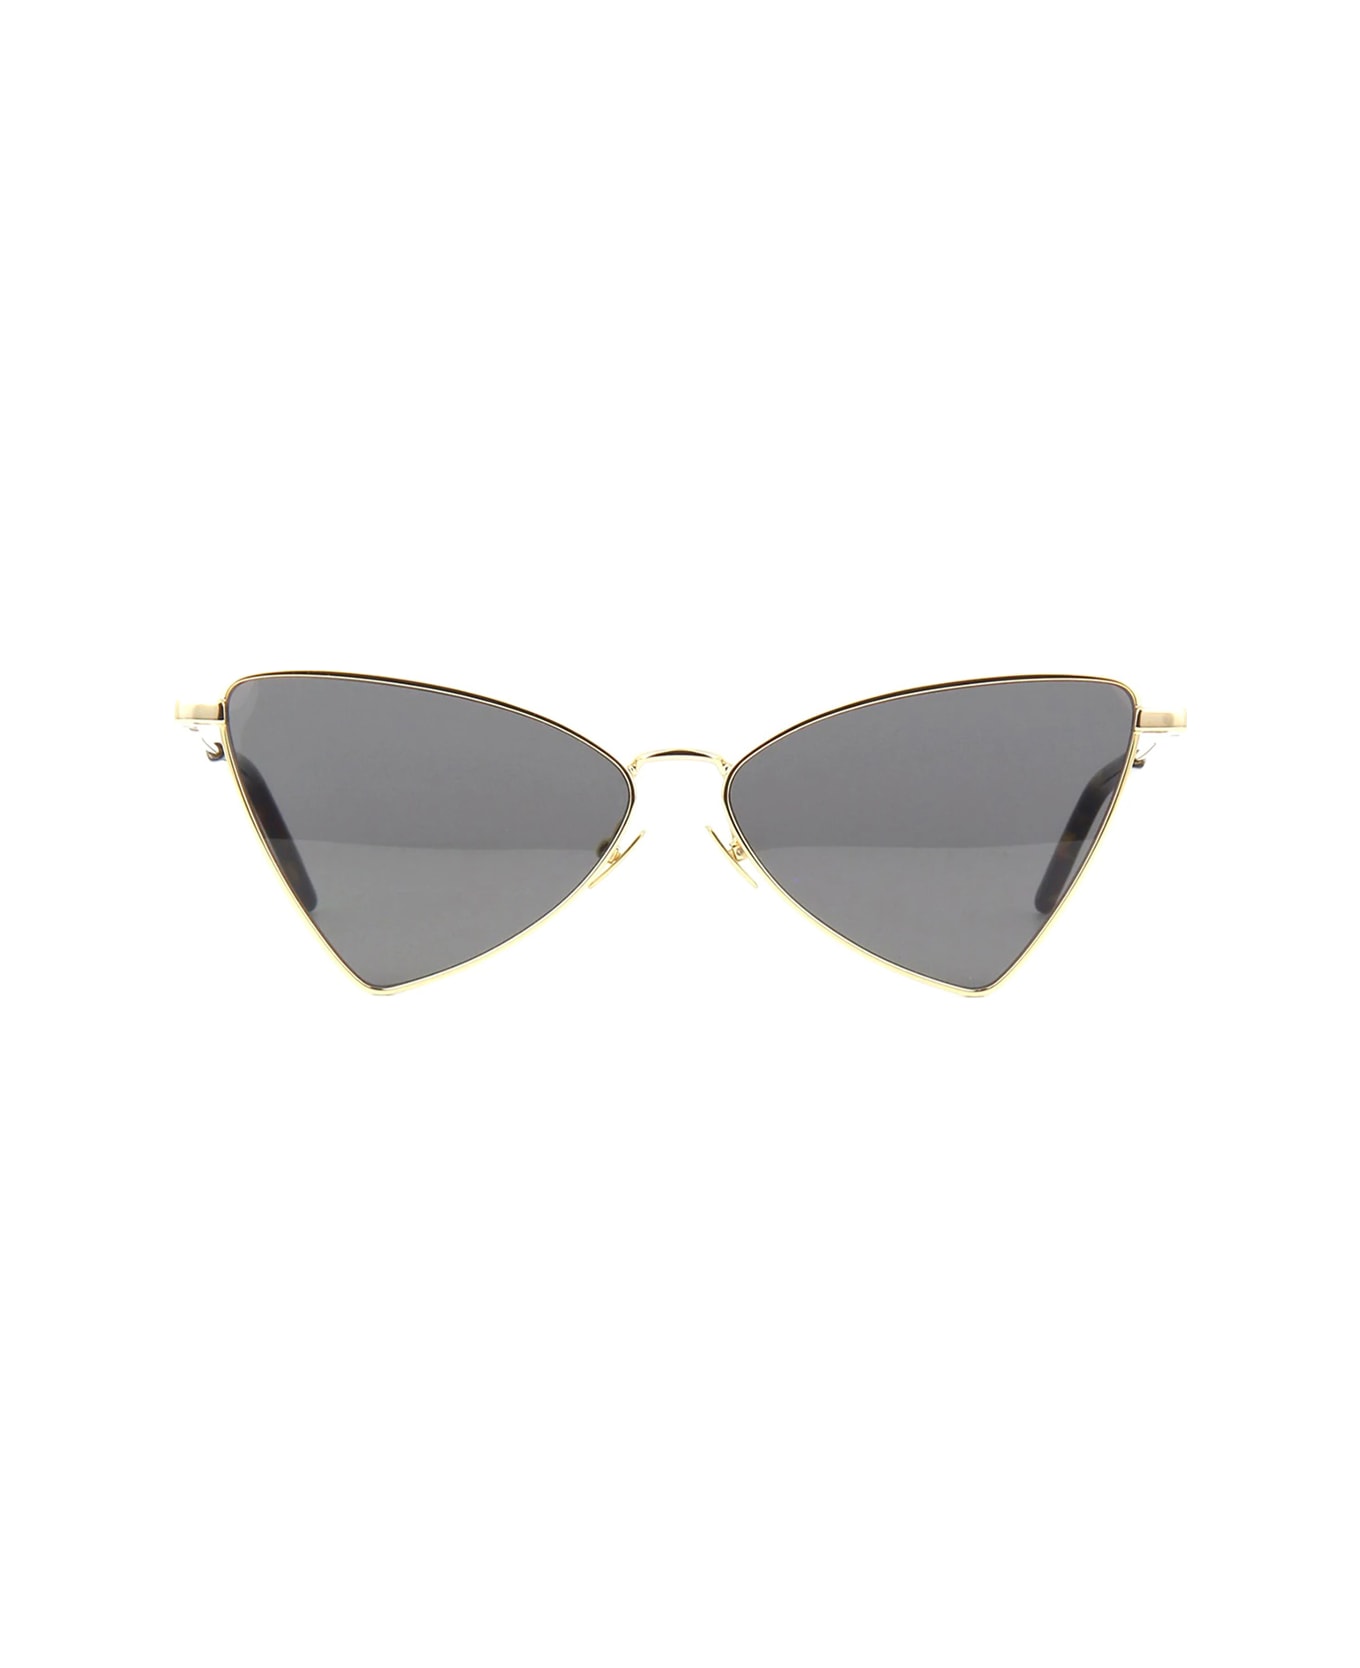 Saint Laurent Eyewear Sl 303 004 Sunglasses - Oro